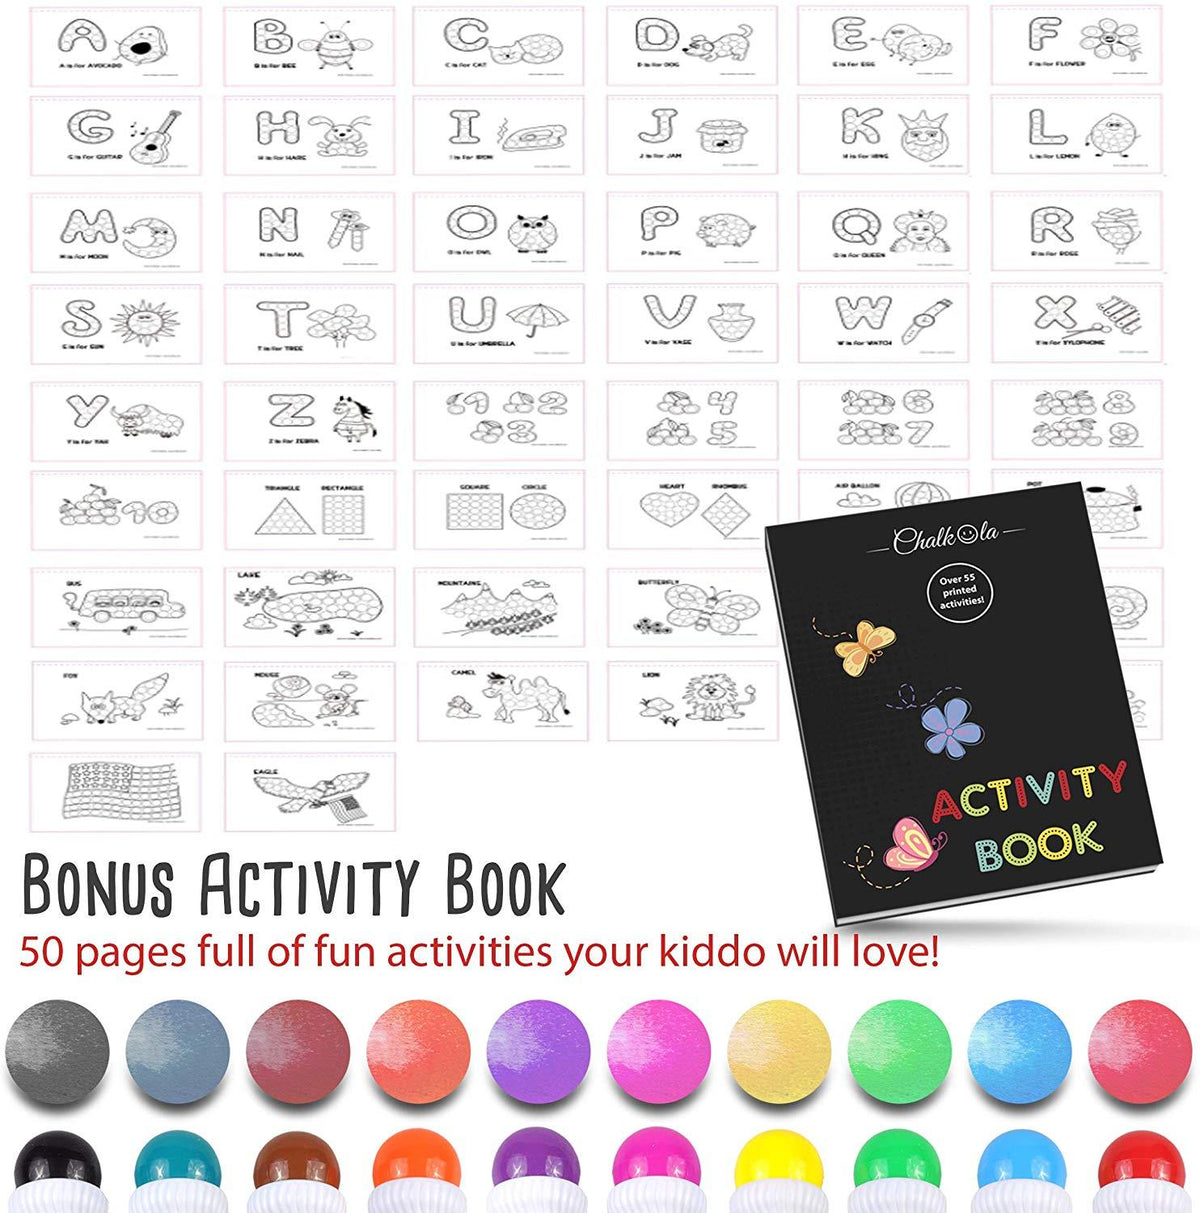 Bundle for Kids: 10 + 8 Washable Dot Markers